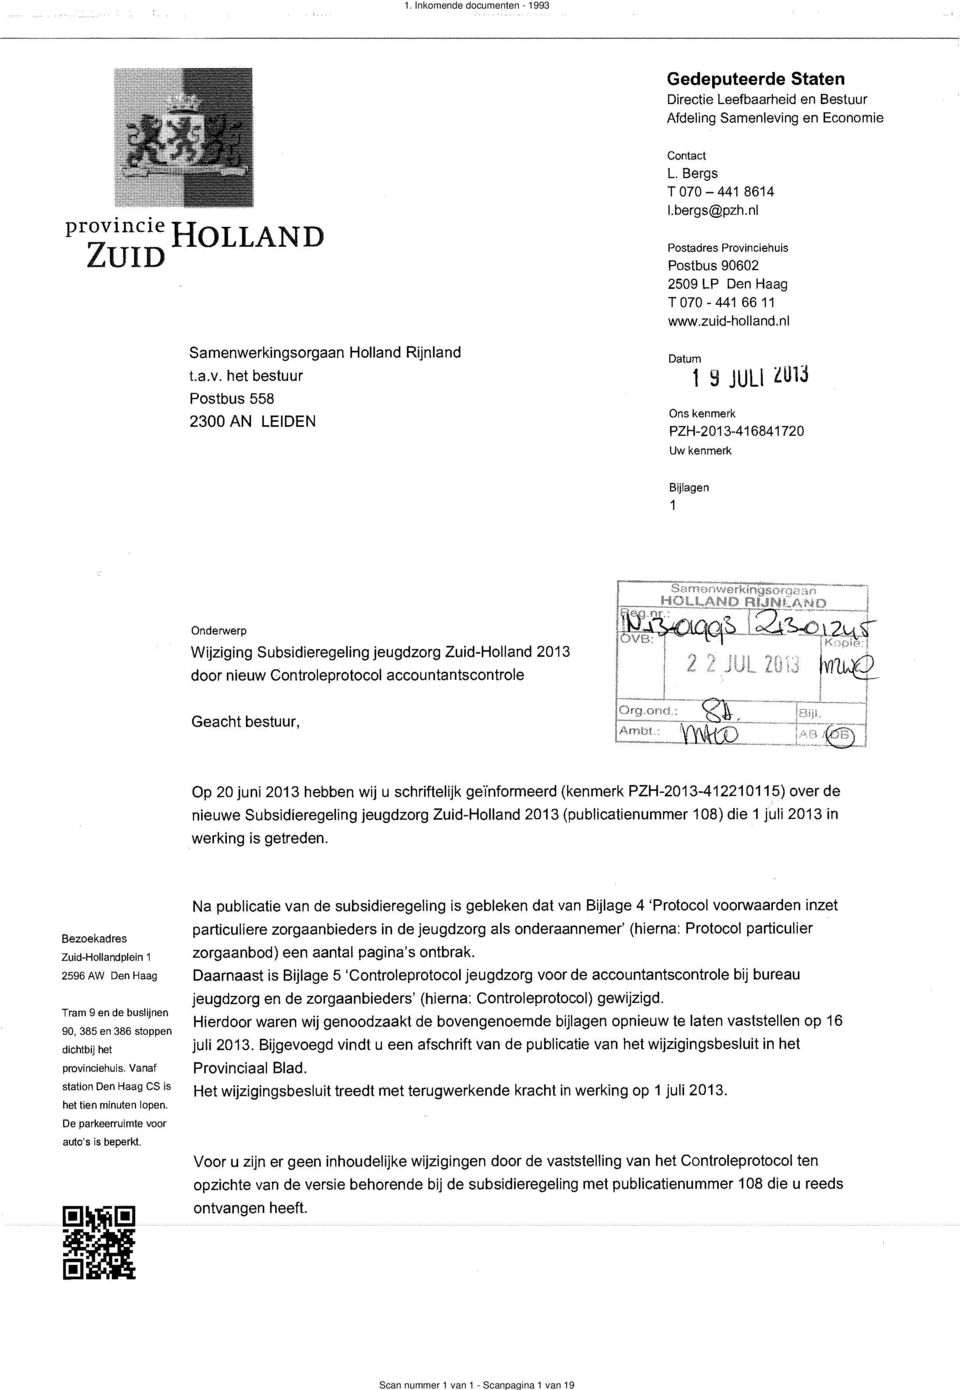 nciehuis Postbus 90602 2509 LP Den Haag T 070-441 66 11.zuid-holland.nl provi